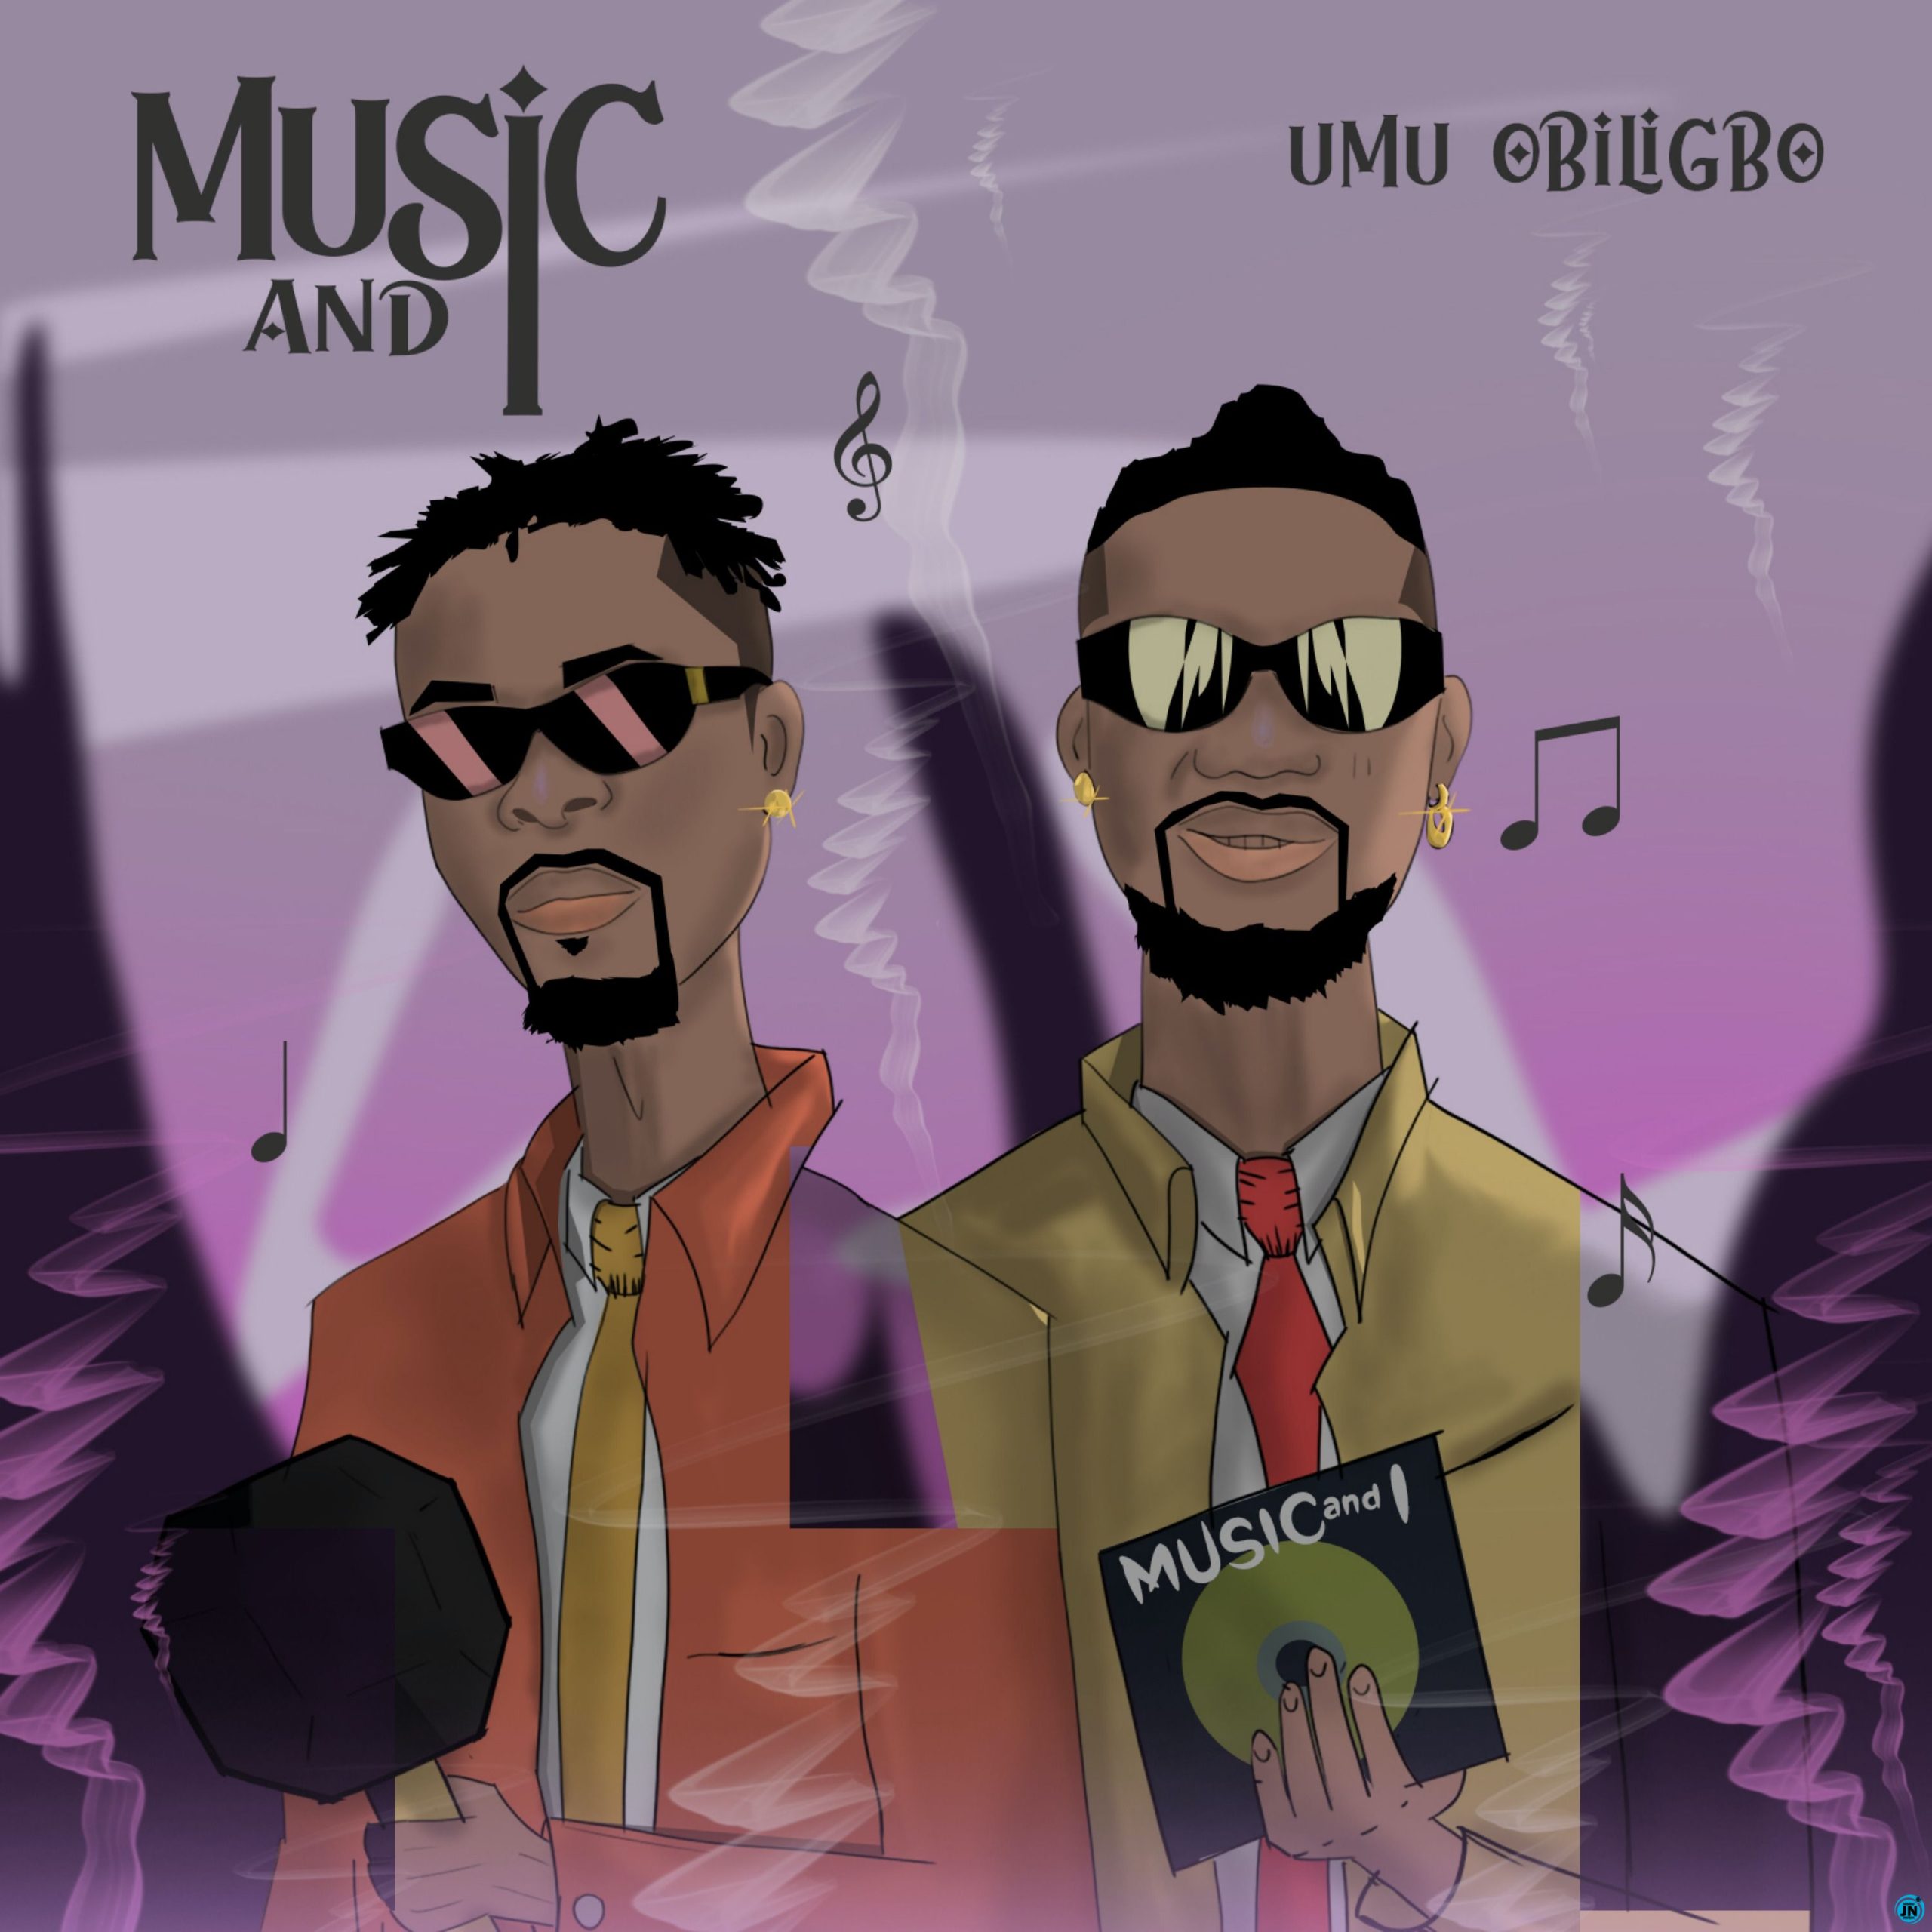 Umu Obiligbo – Work and Chop Ft. Magnito